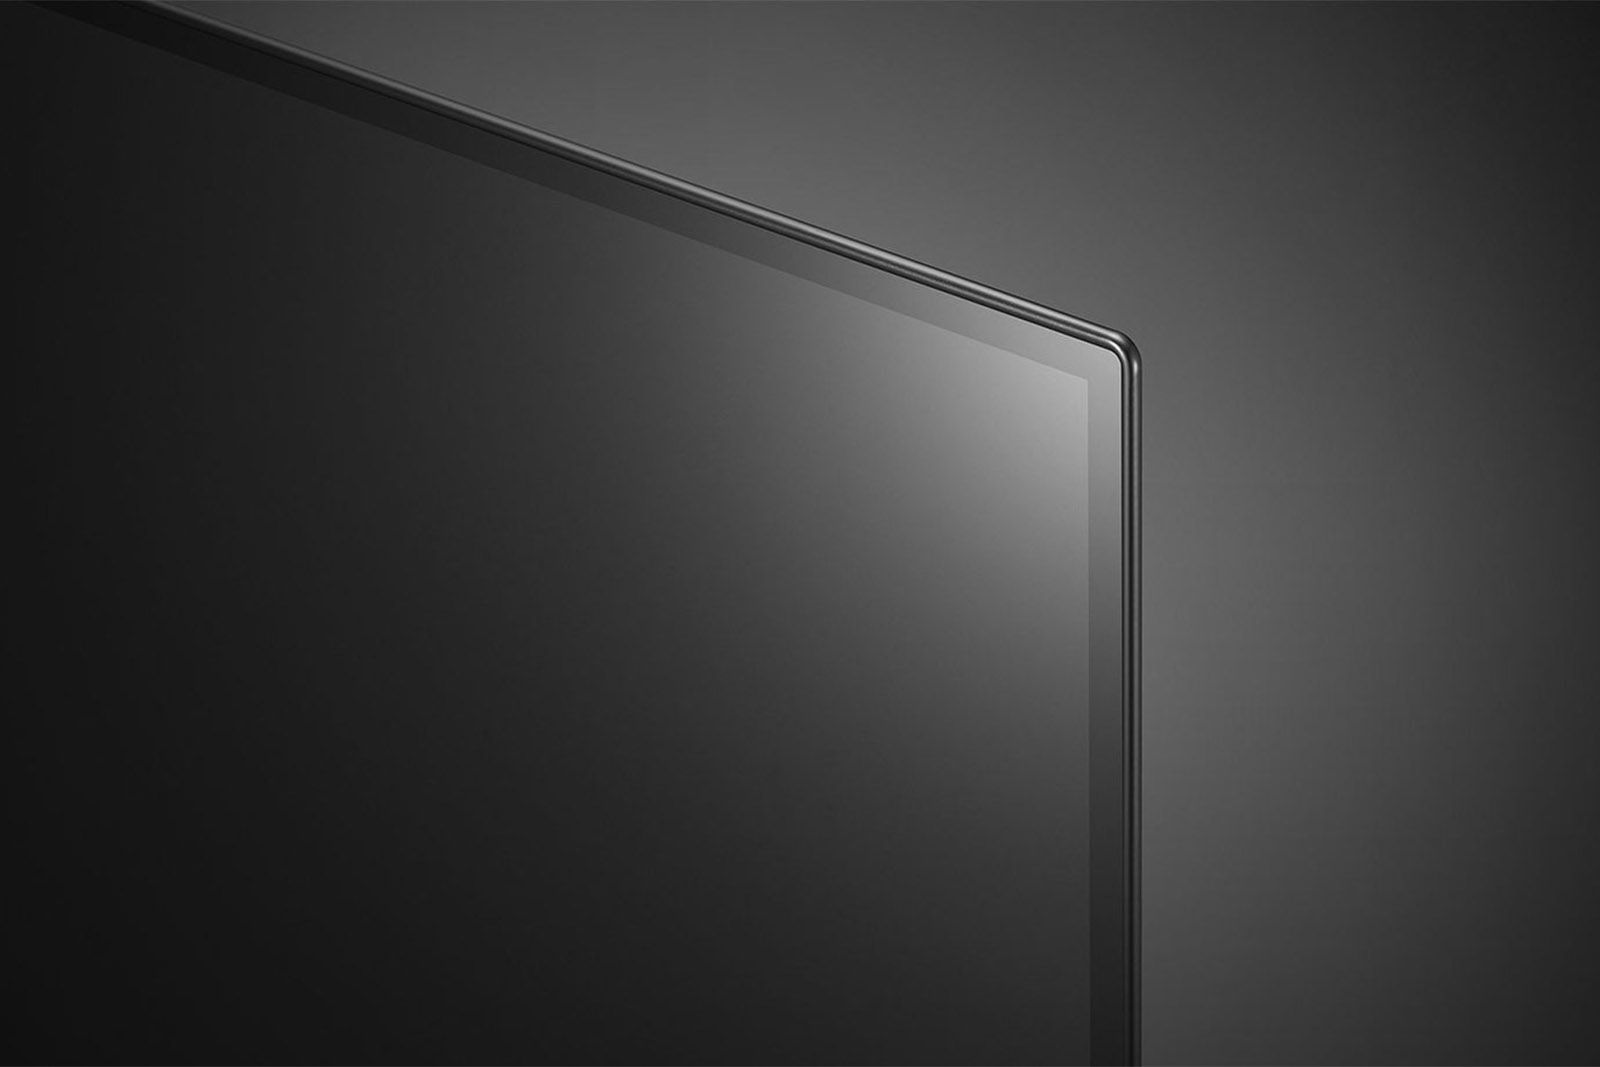 LG C1 OLED 4K TV review photo 1